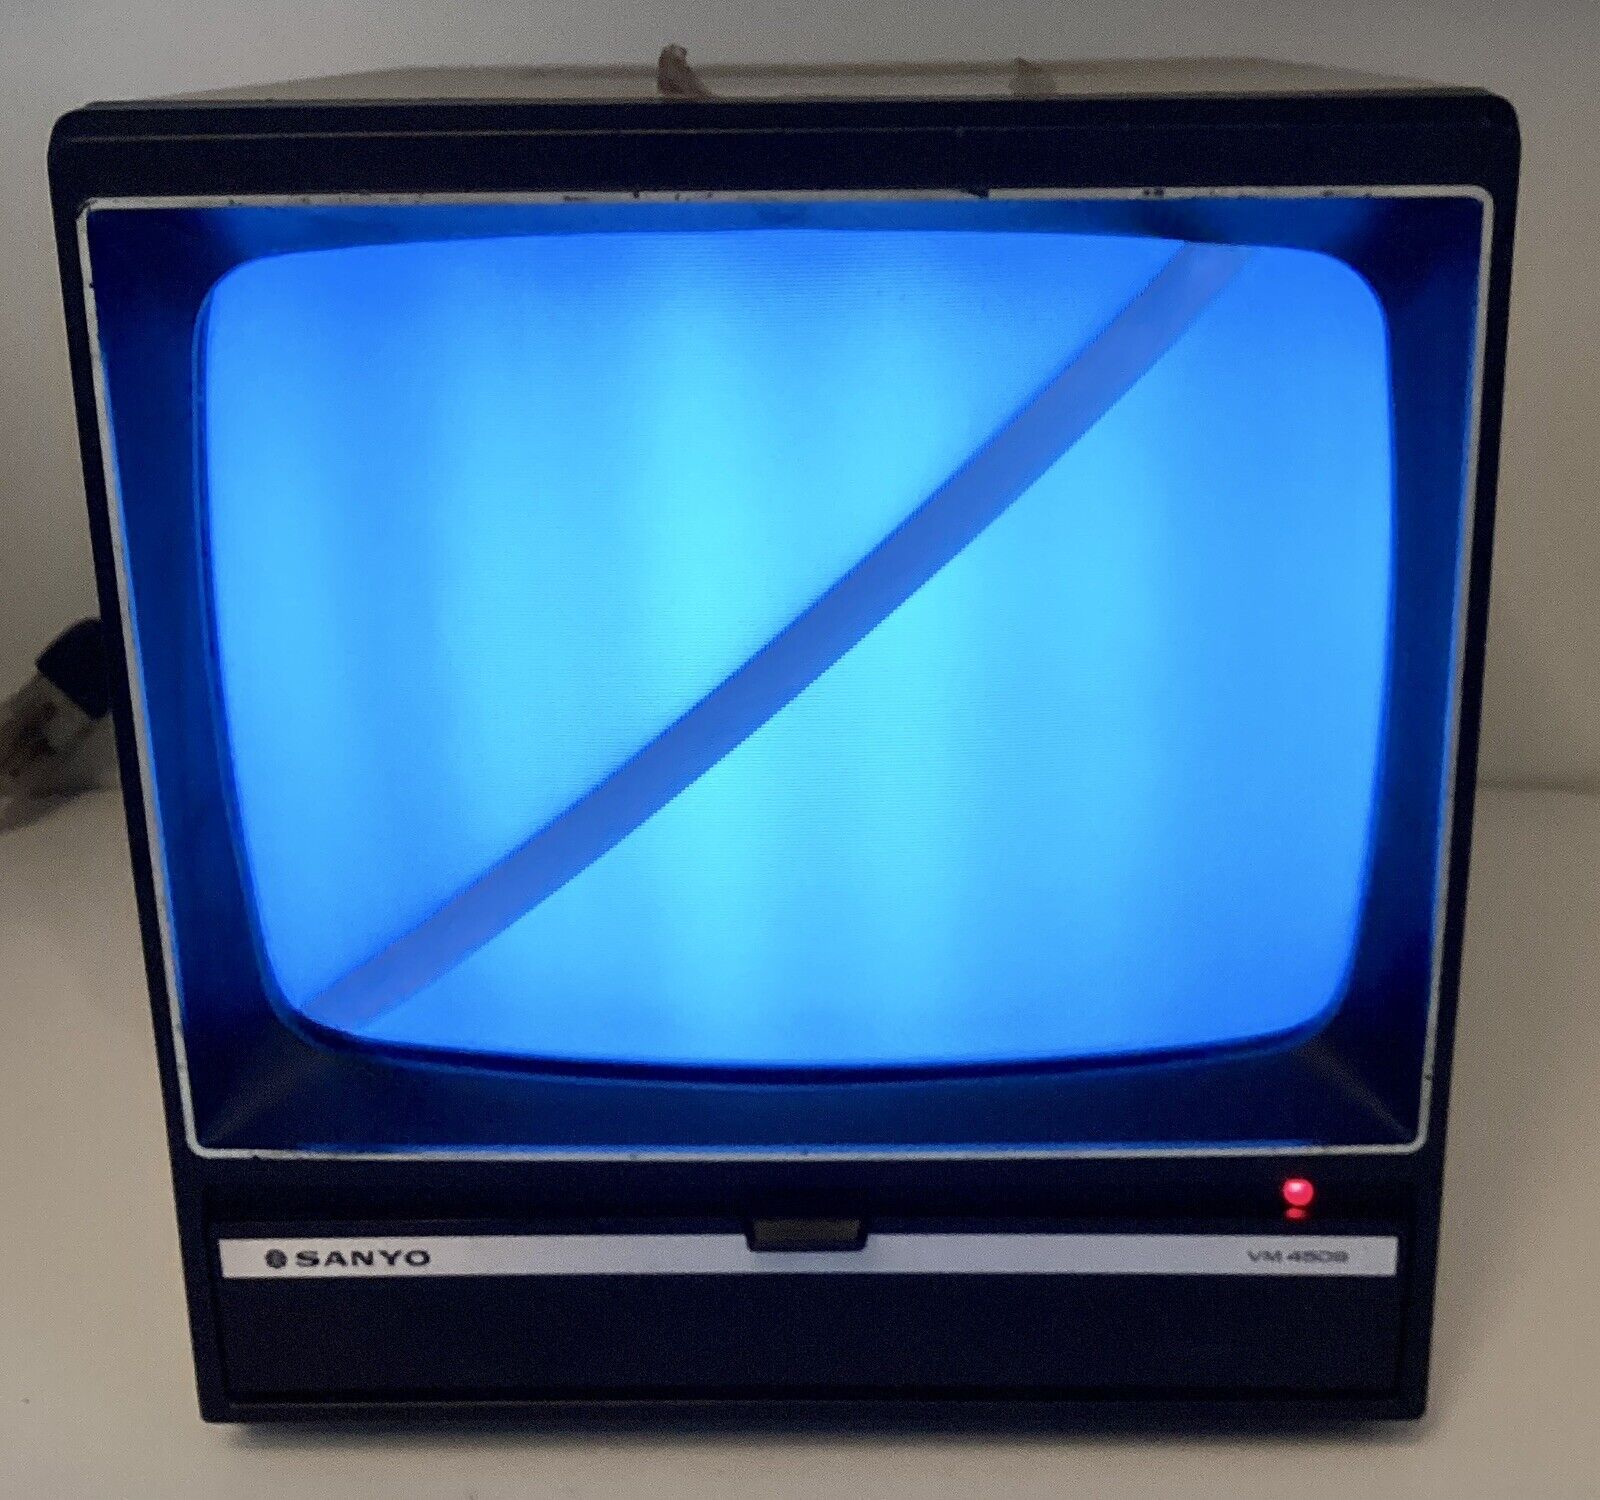 Sanyo VM 4509 Vintage Video Monitor Made in Japan 1984